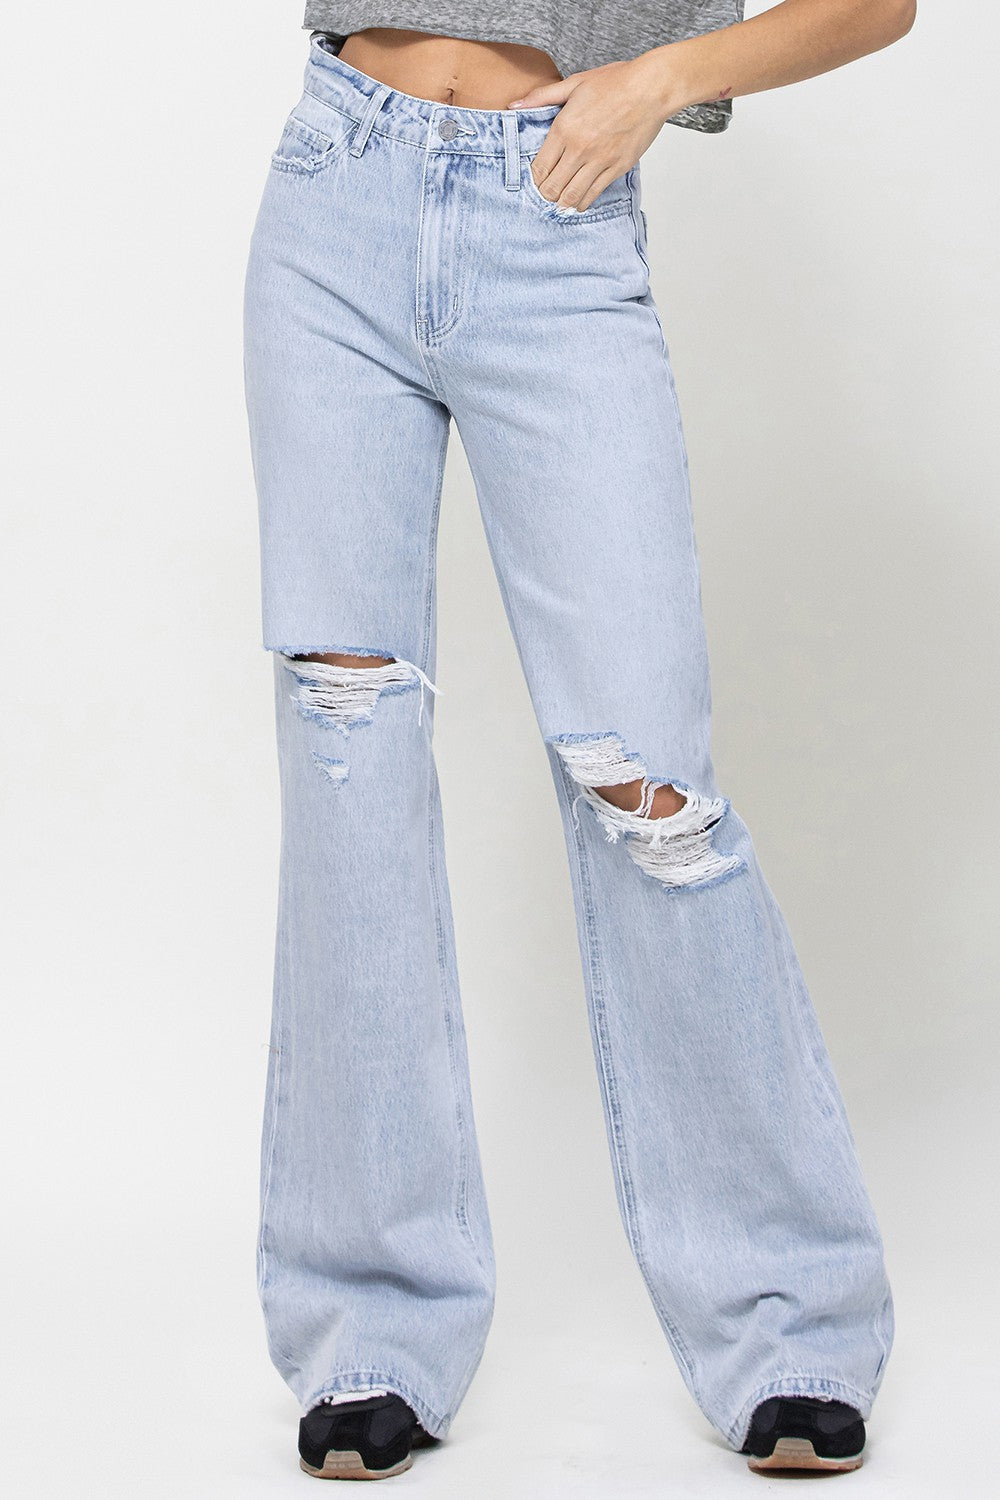 Avril Jeans